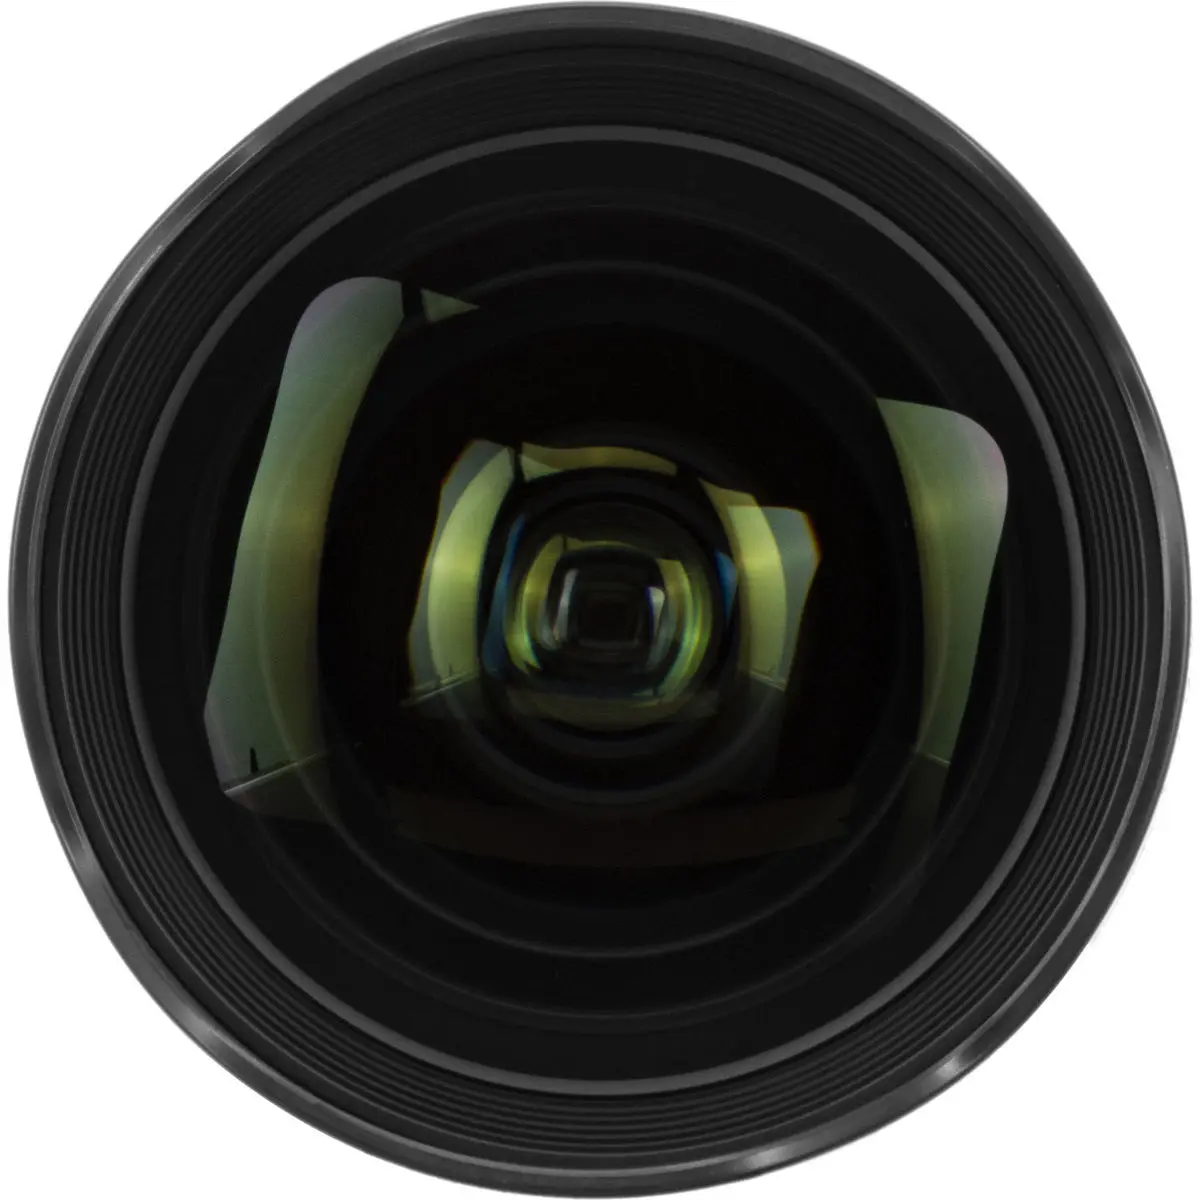 5. Sigma 20mm F1.4 DG HSM | A (Sony-E) Lens